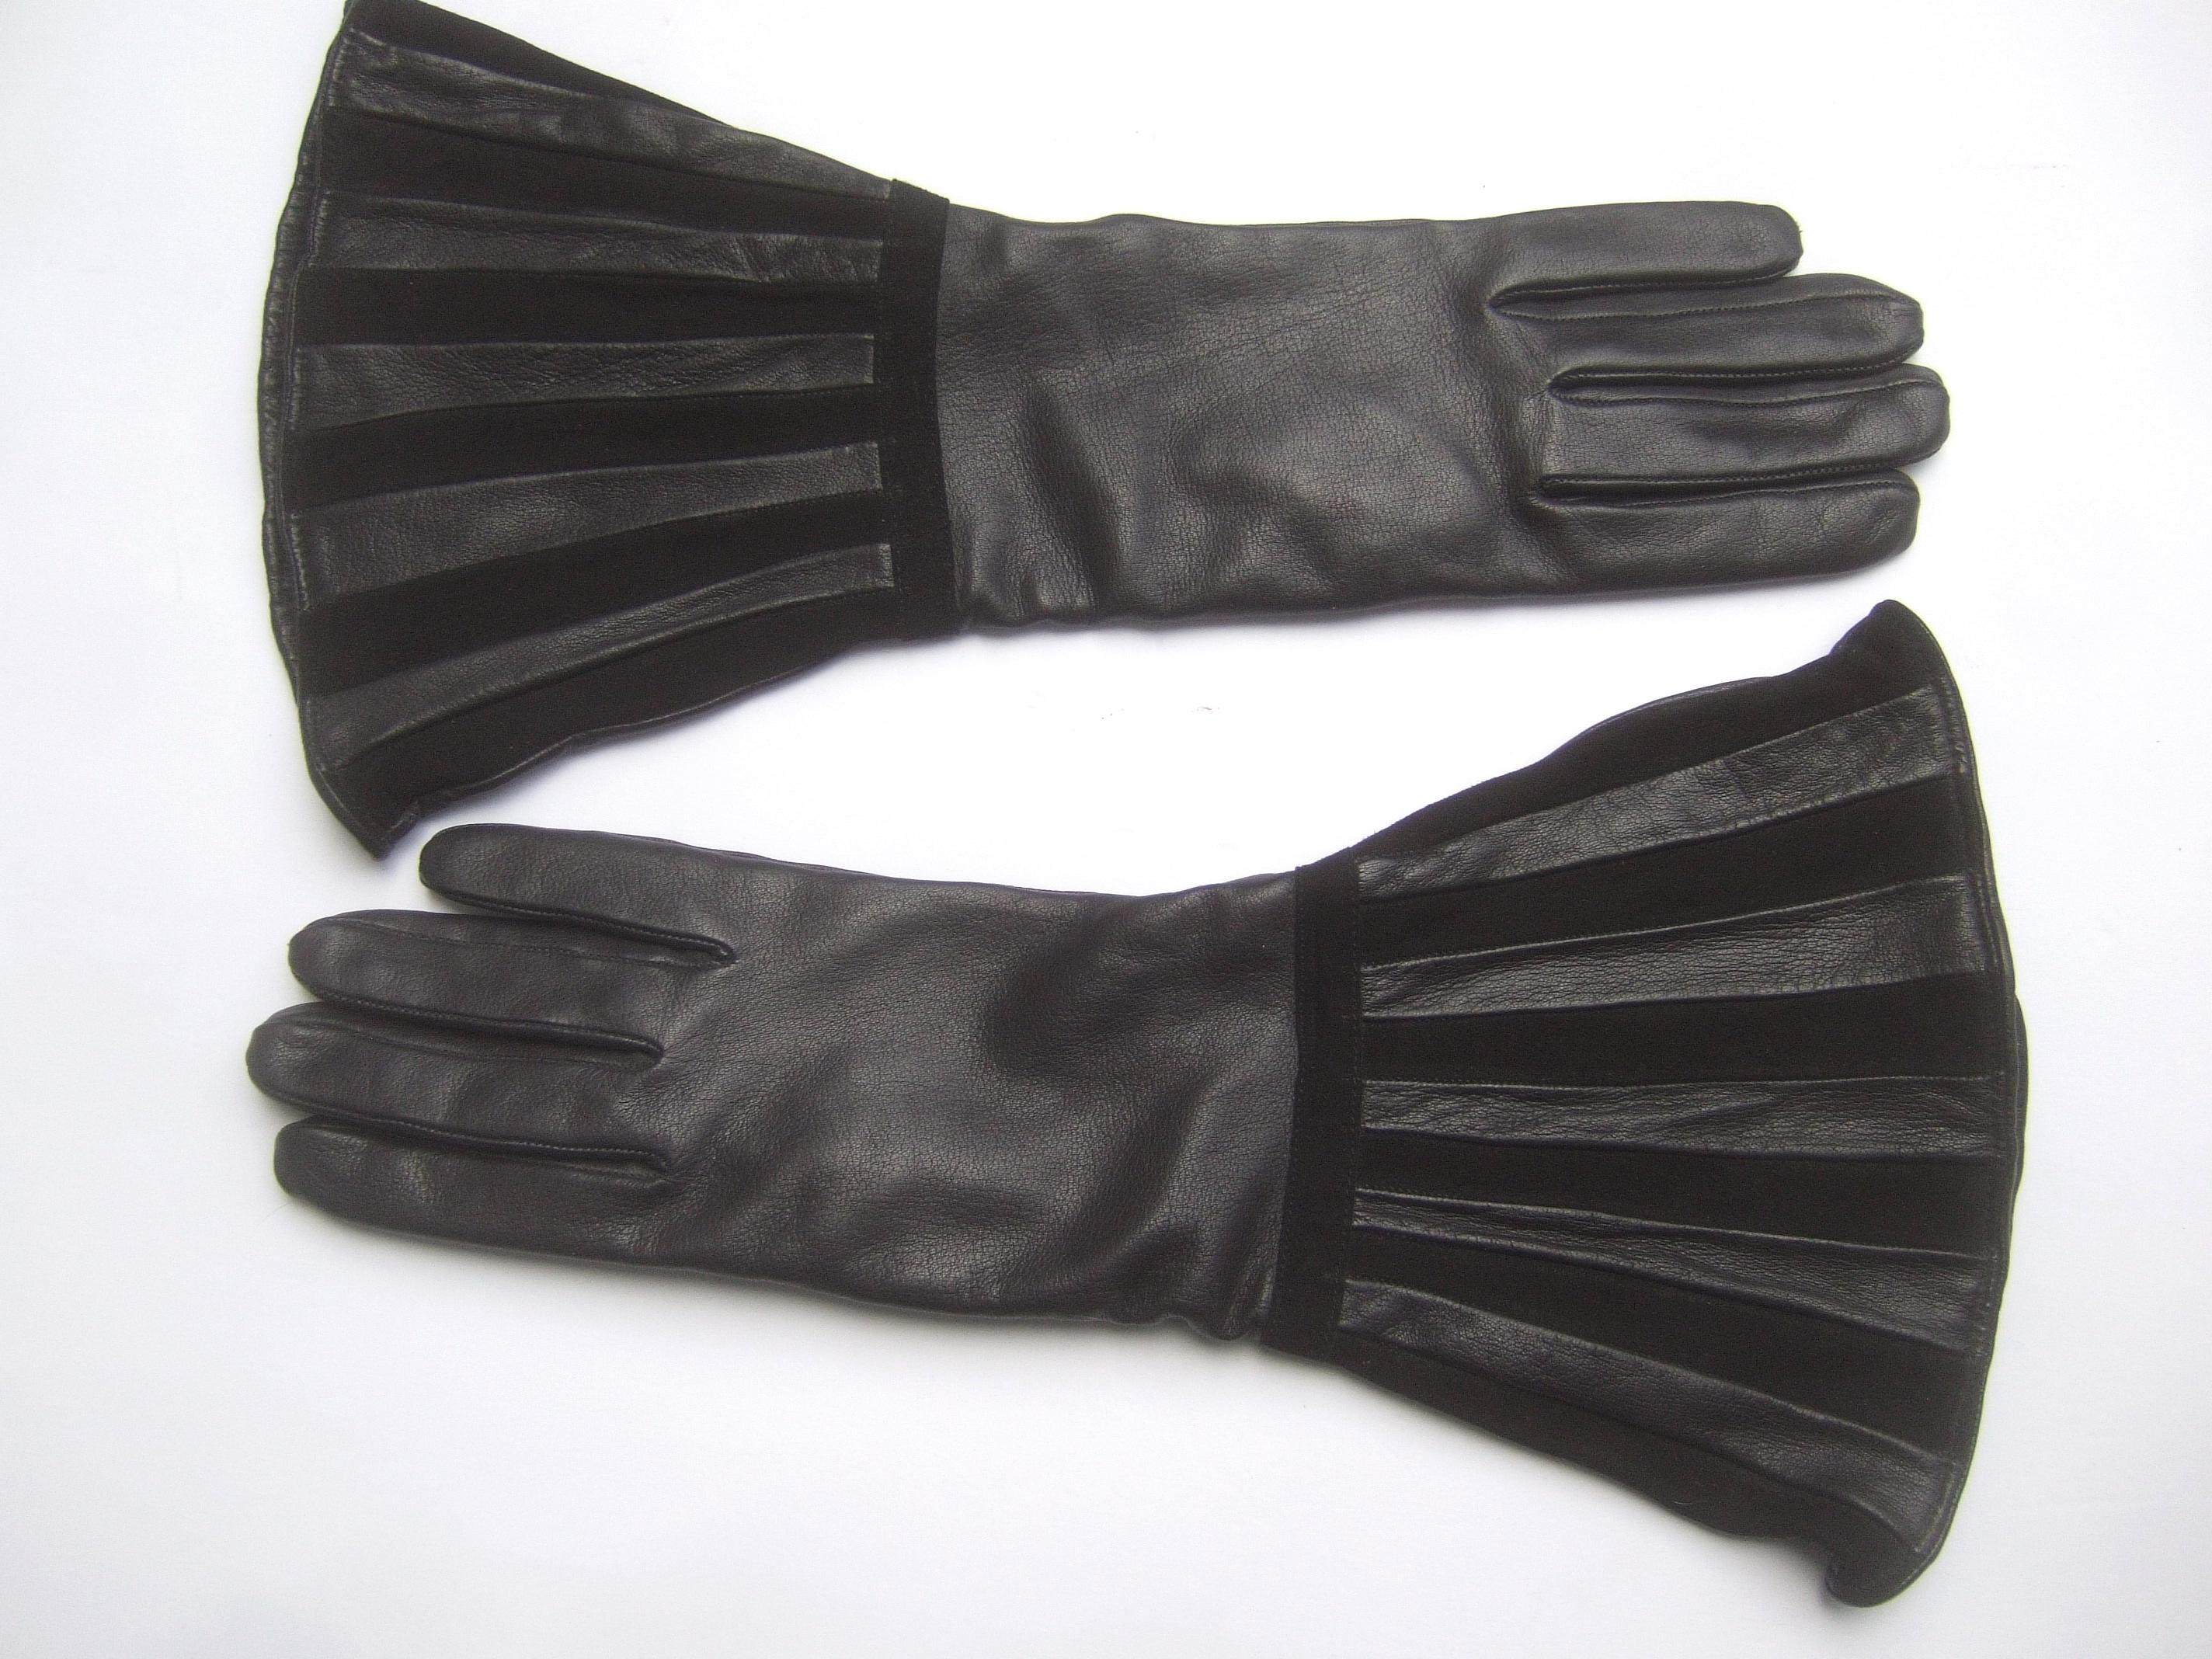 1890s gloves